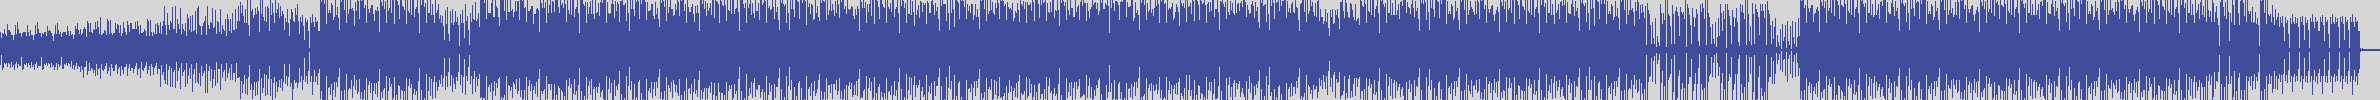 nf_boyz_records [NFY007] Pascal Van Jola - Incredible Short [Deep Monarch Mix] audio wave form